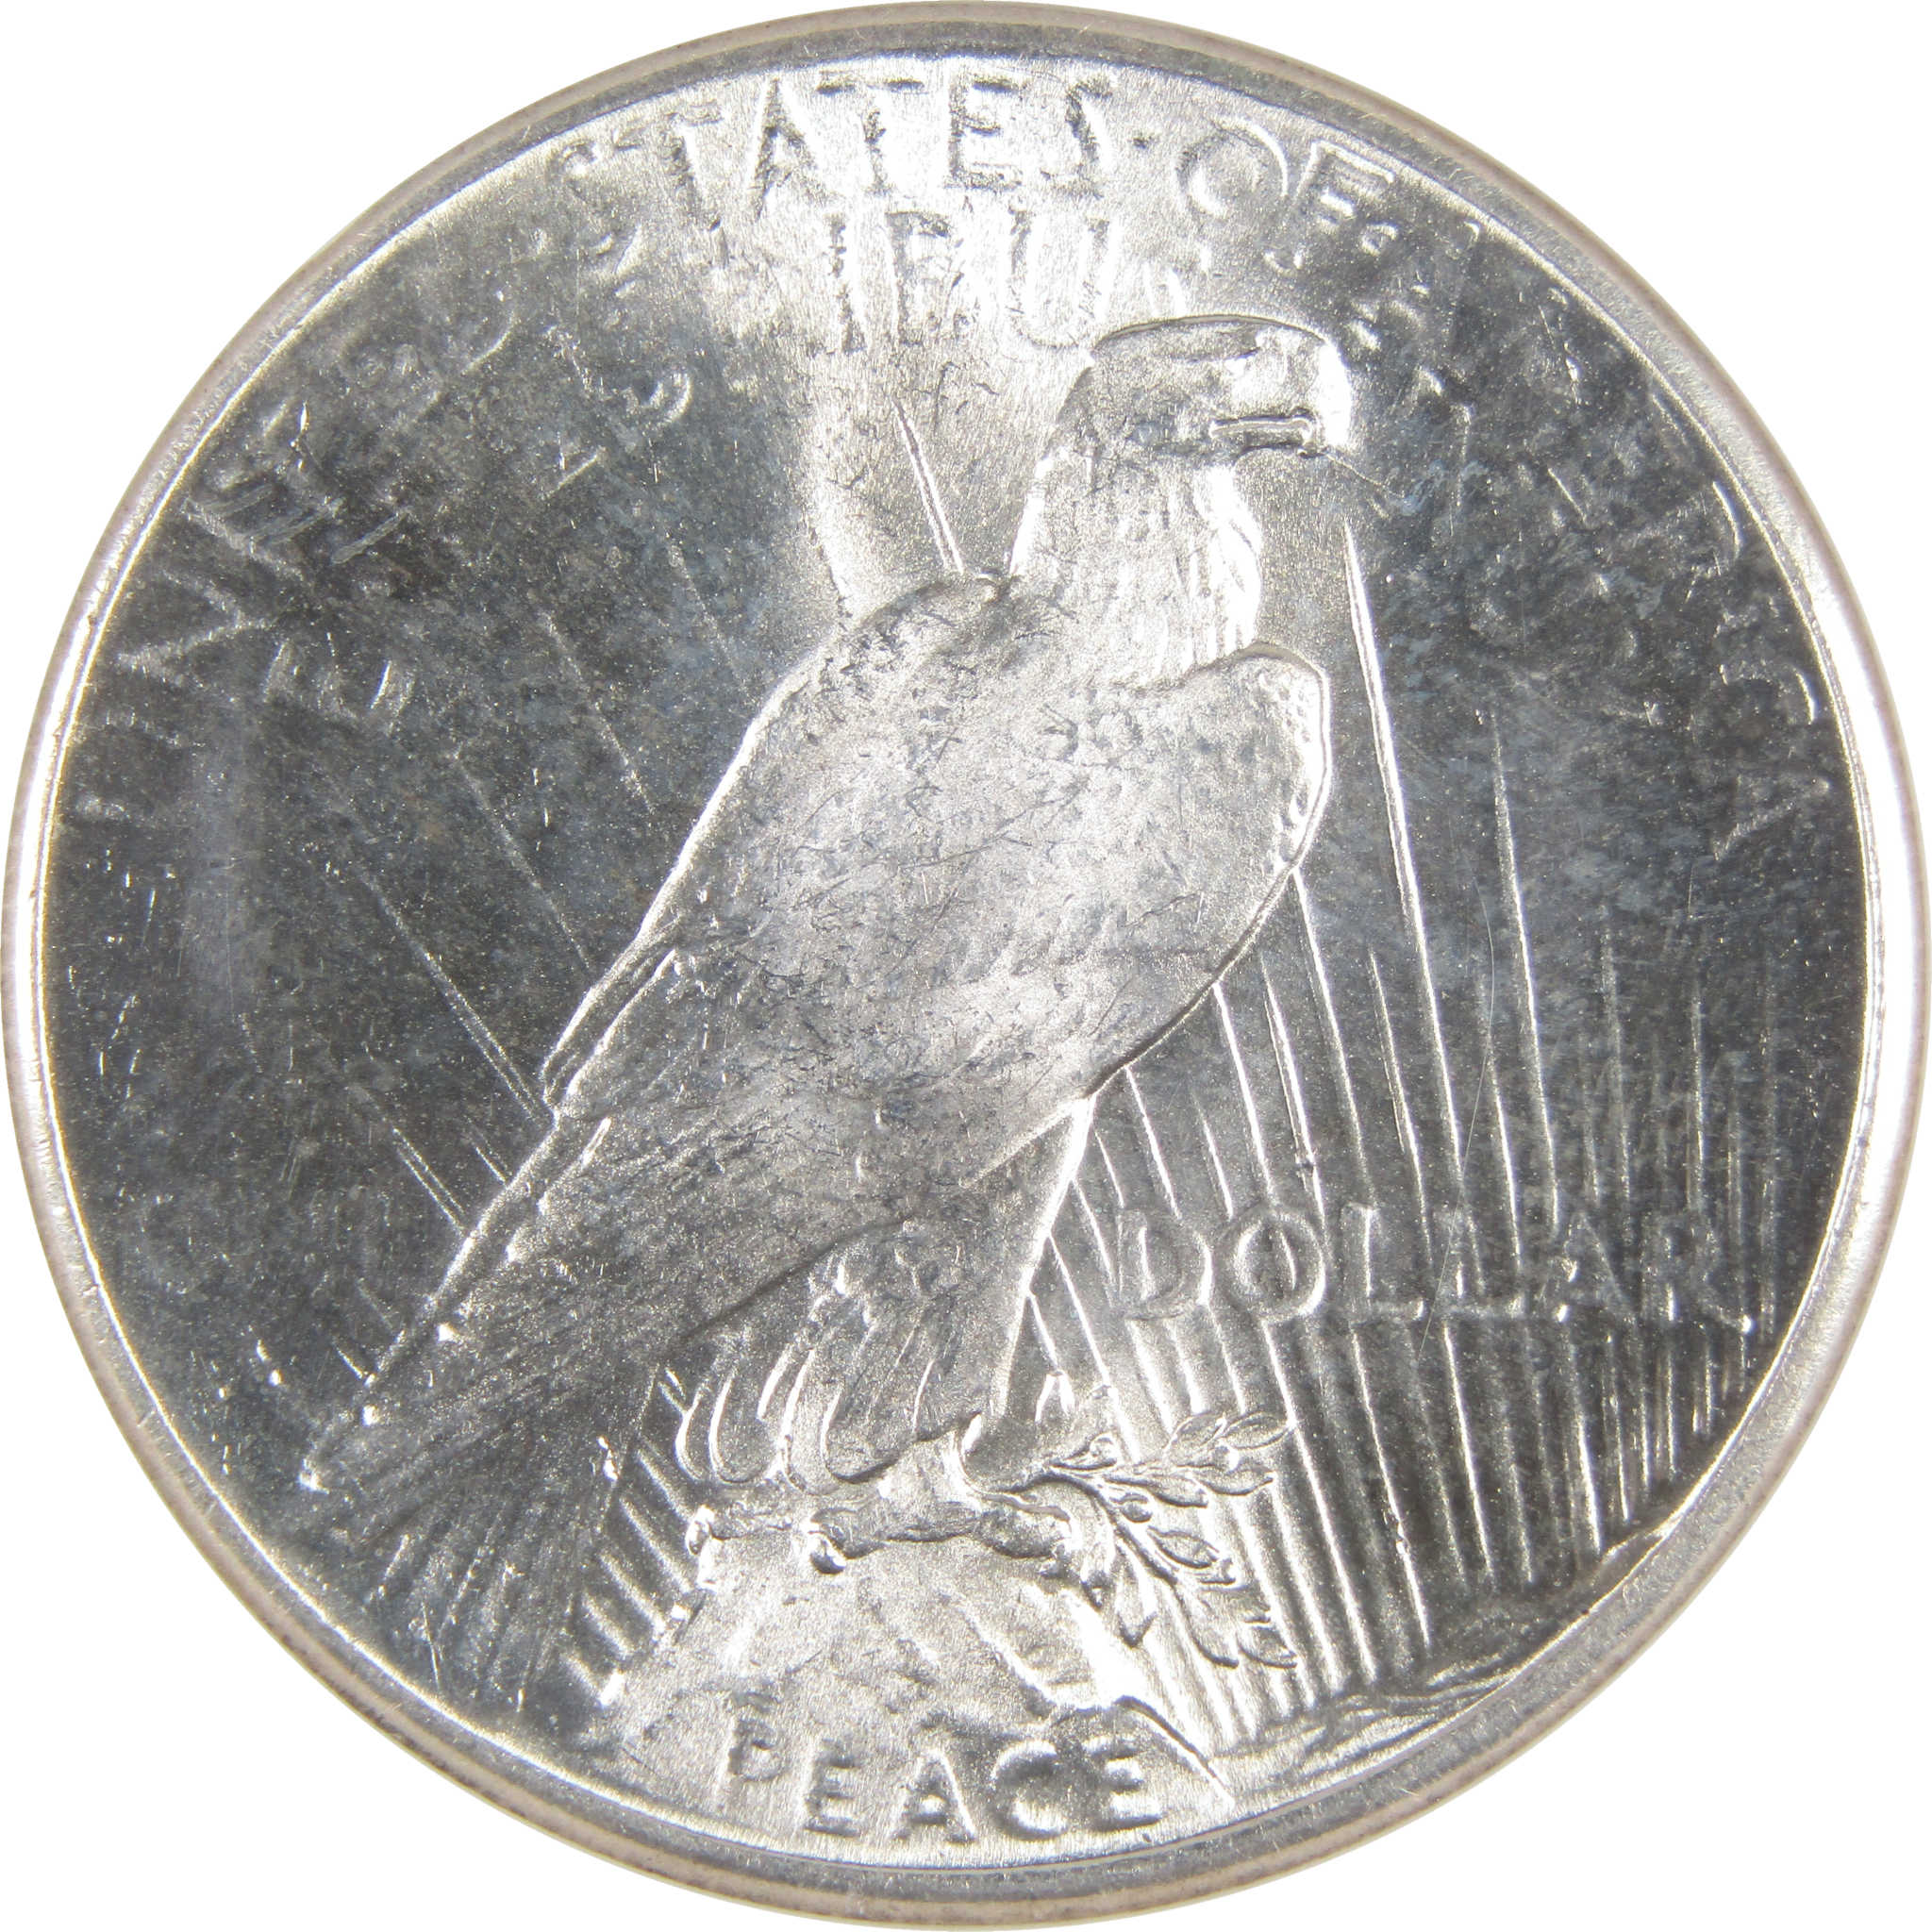 1926 Peace Dollar MS 64 NGC 90% Silver Uncirculated Coin SKU:I2875